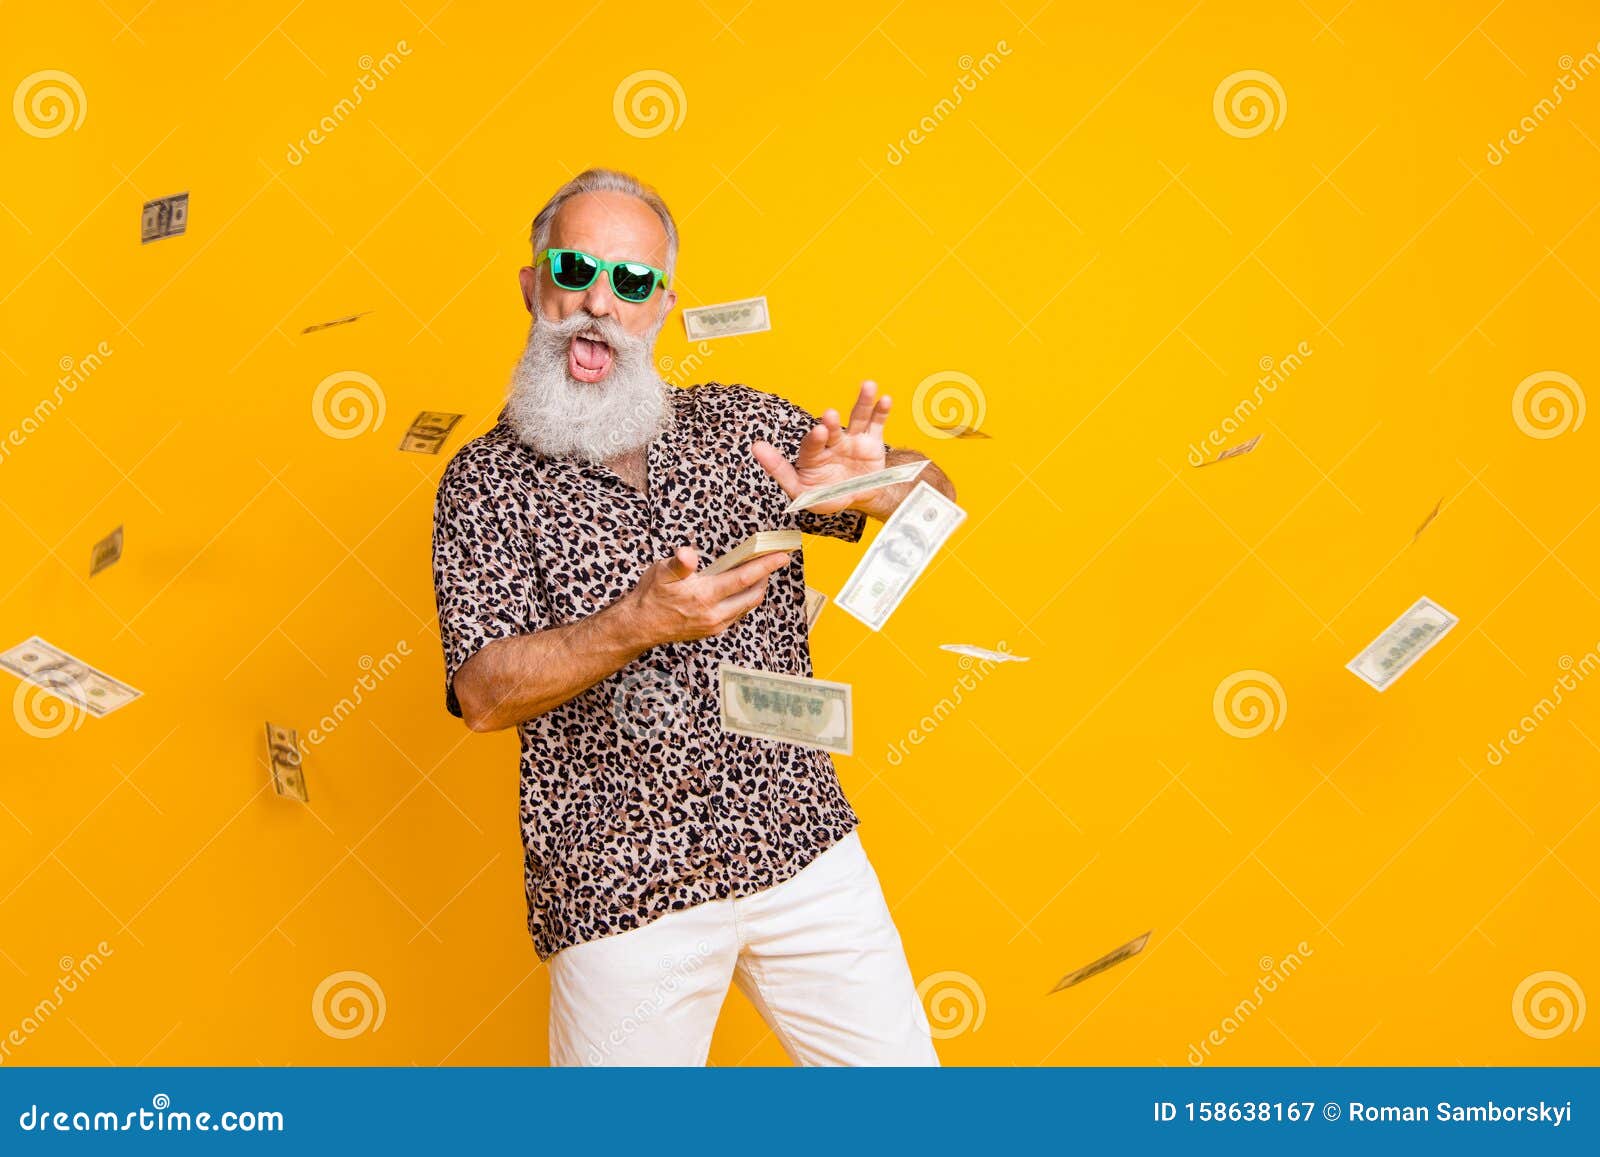 portrait of crazy funny funky old long bearded man millionaire in eyewear eyeglasses waste money throw banknotes wear